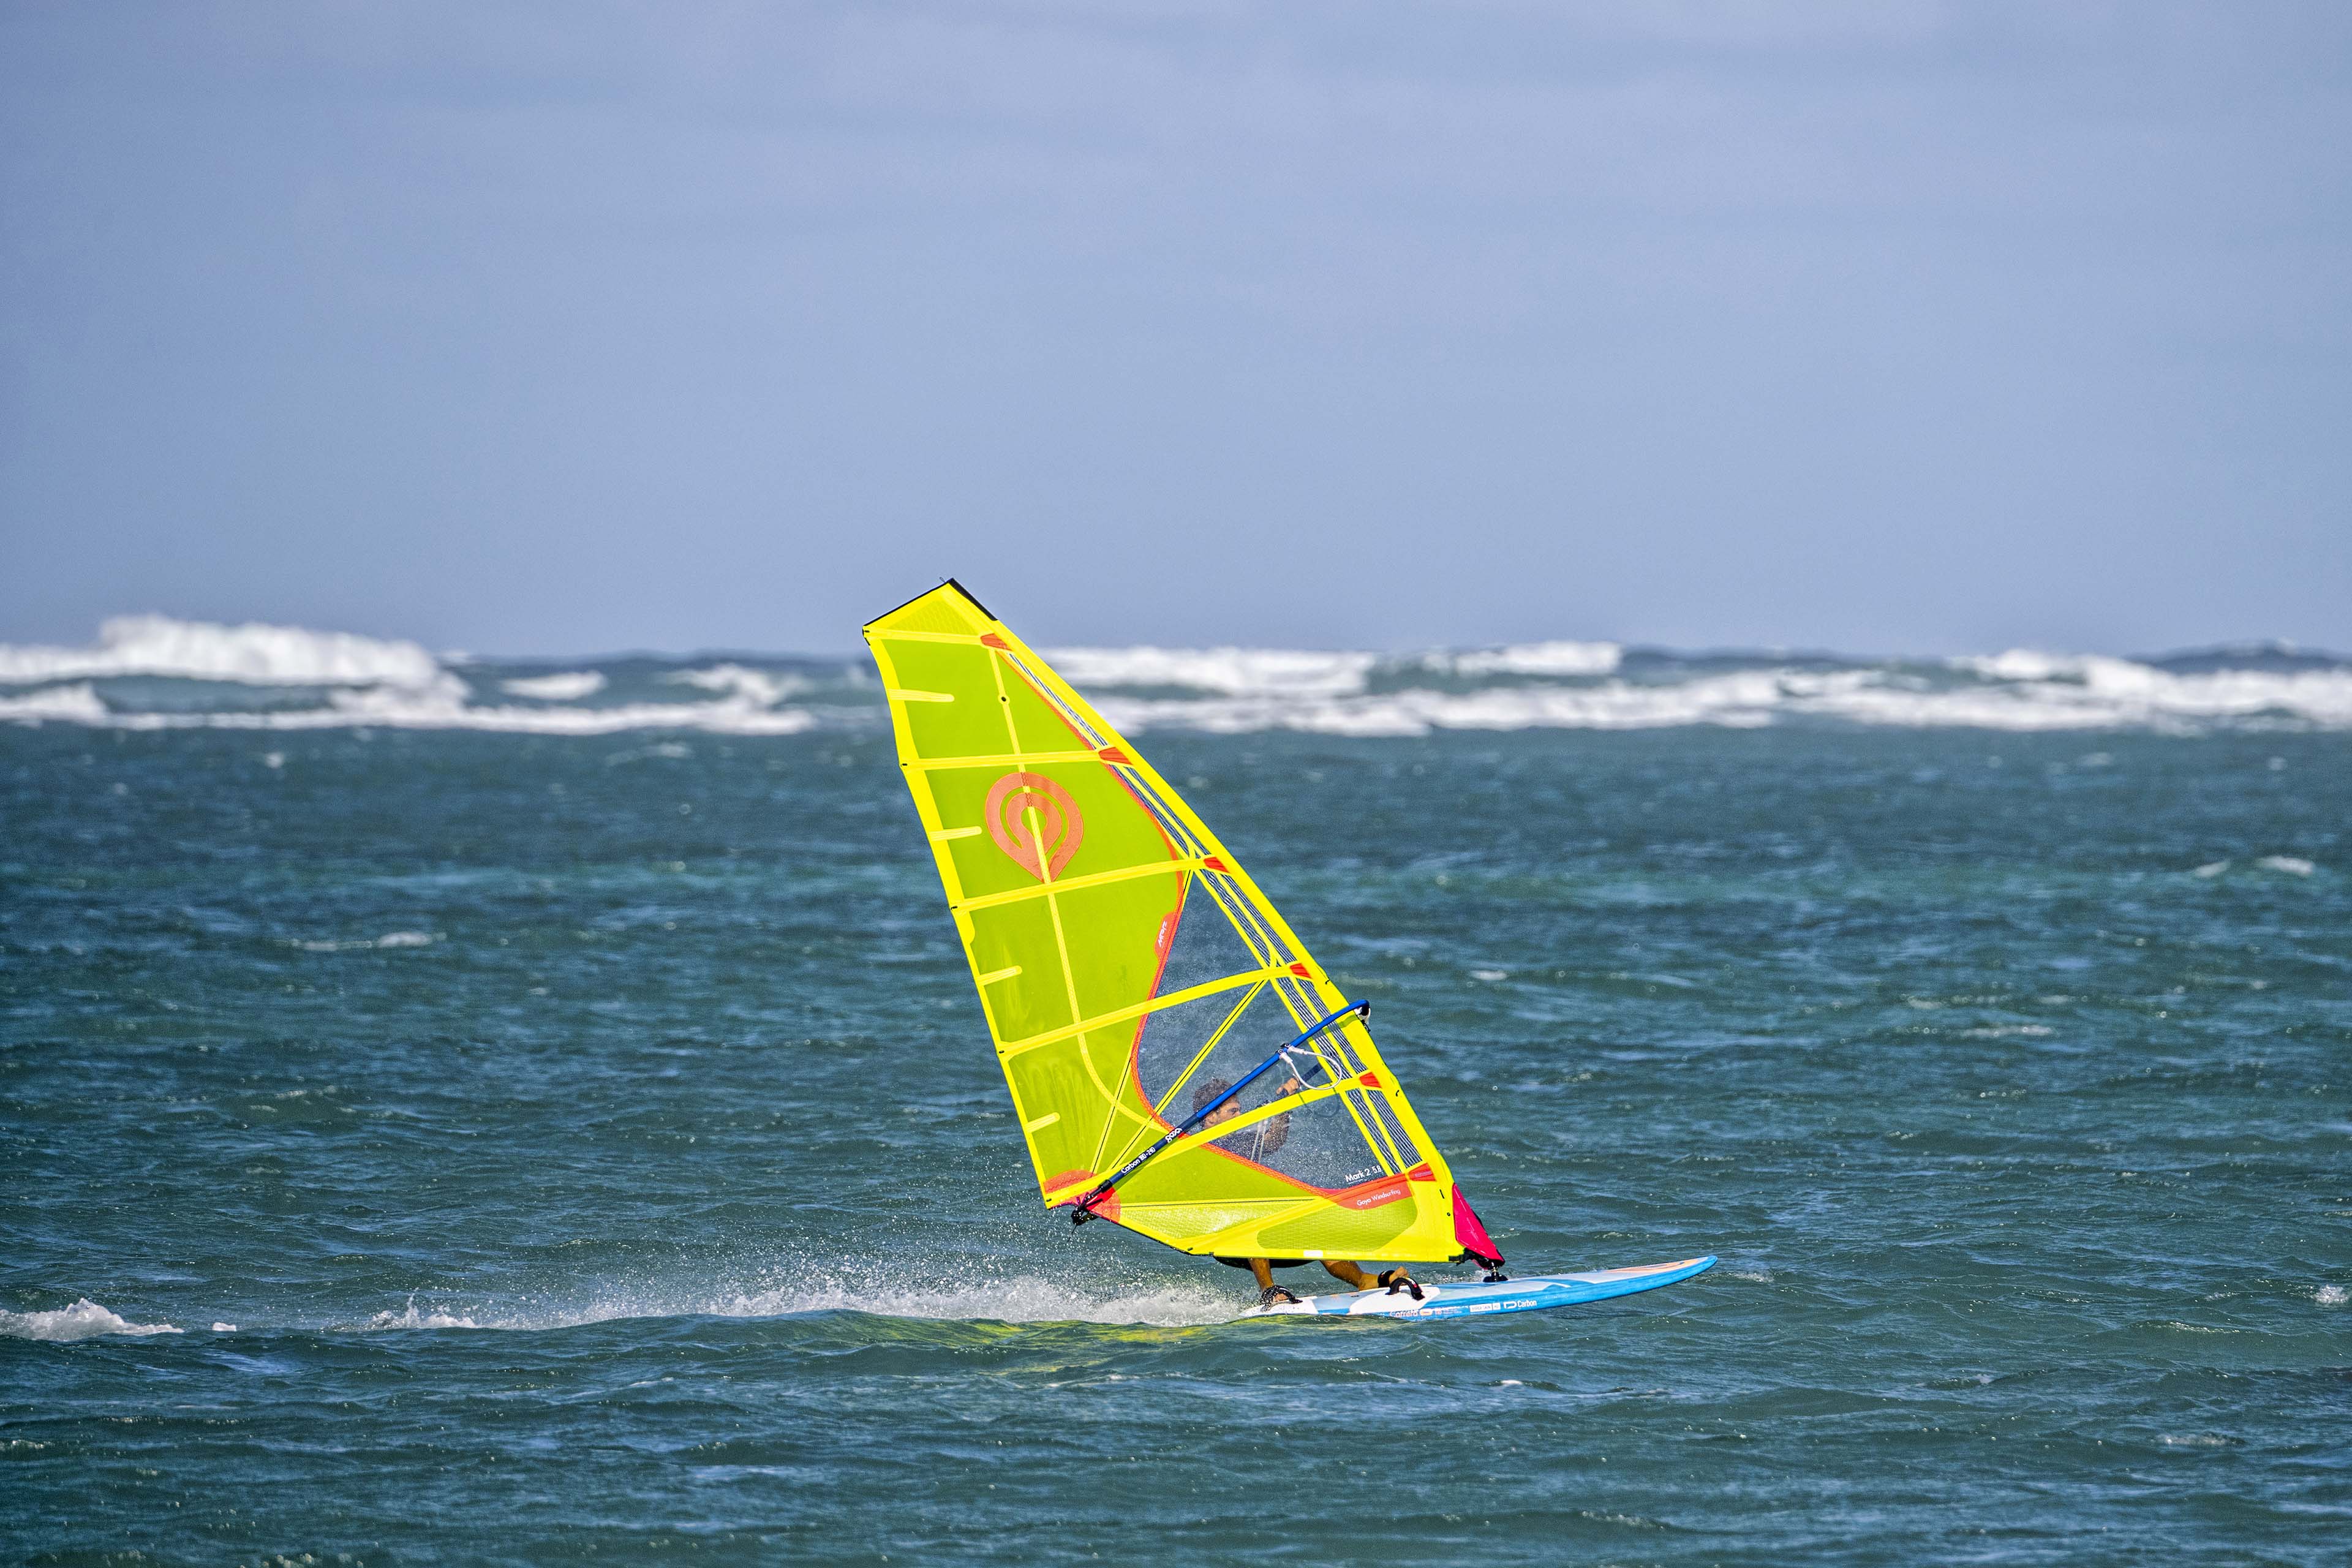 Goya Carrera Pro Freecarve Windsurf Board